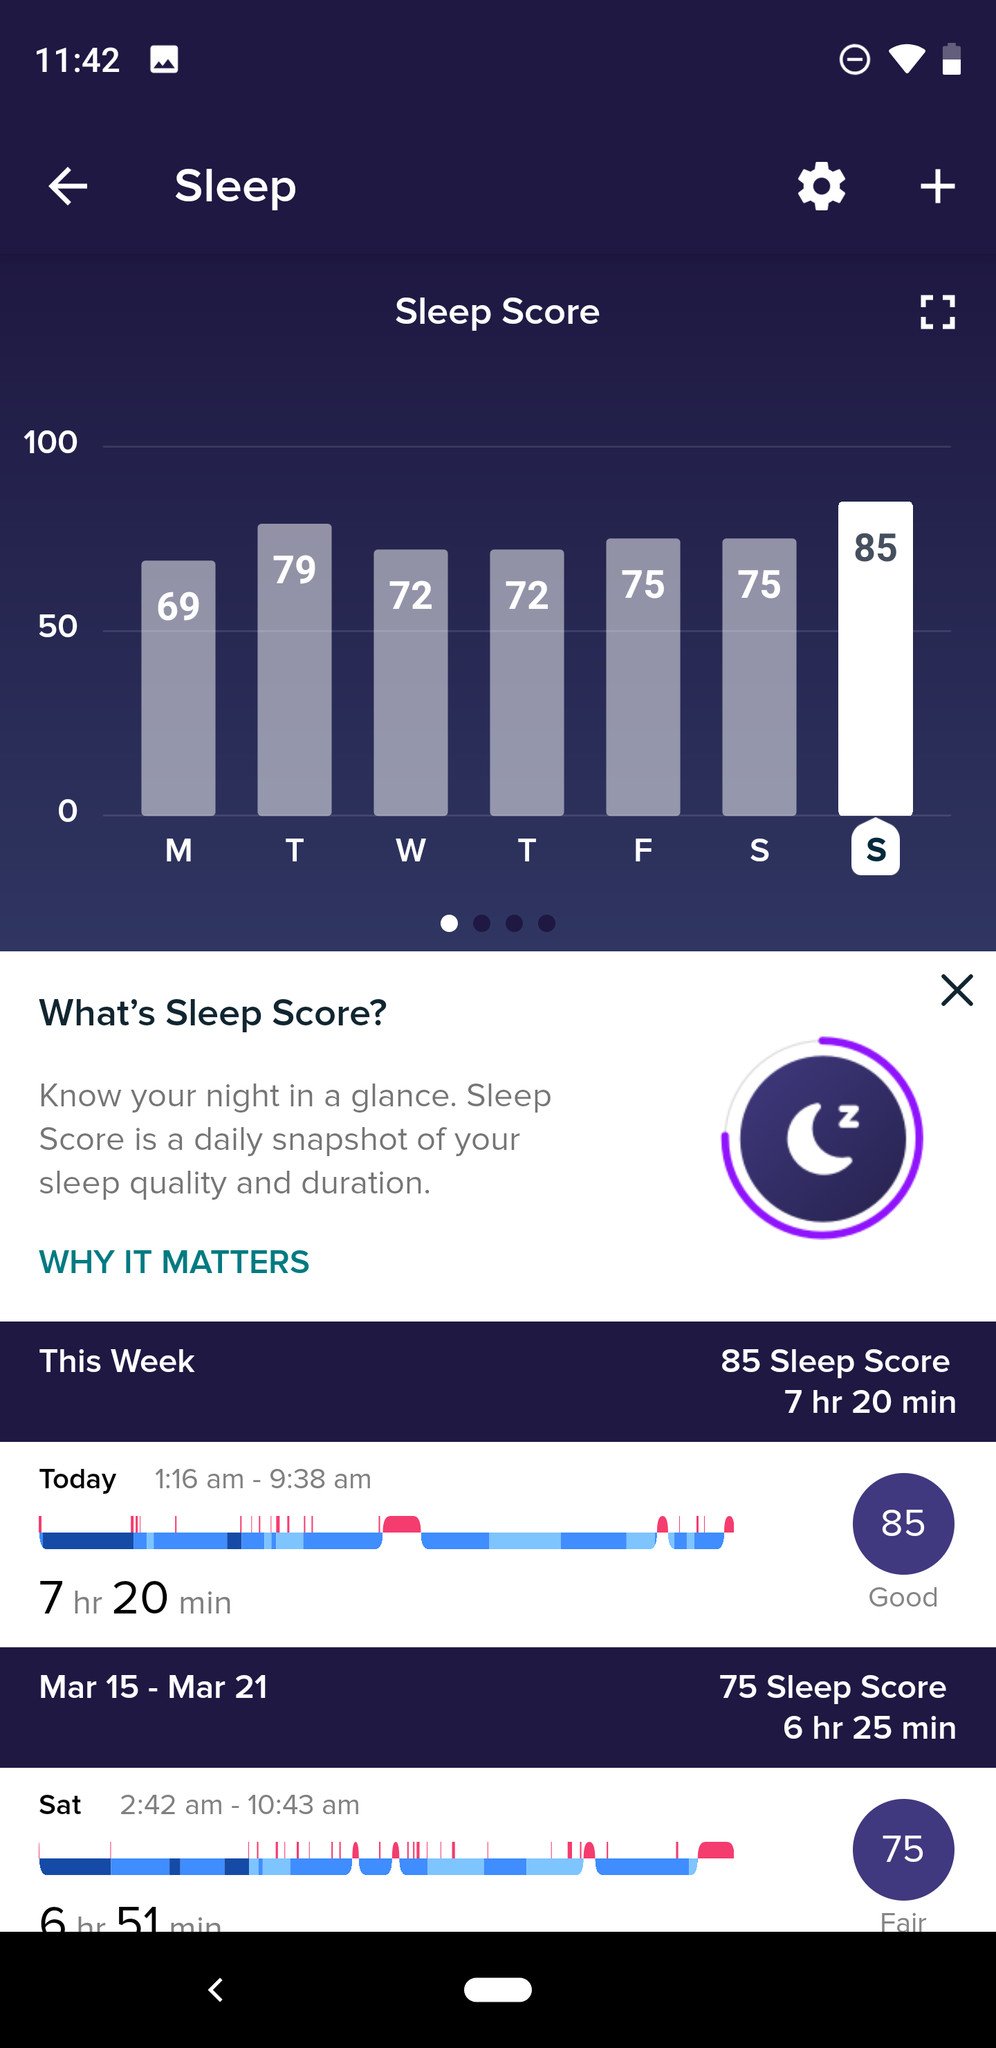 fitbit combine sleep logs